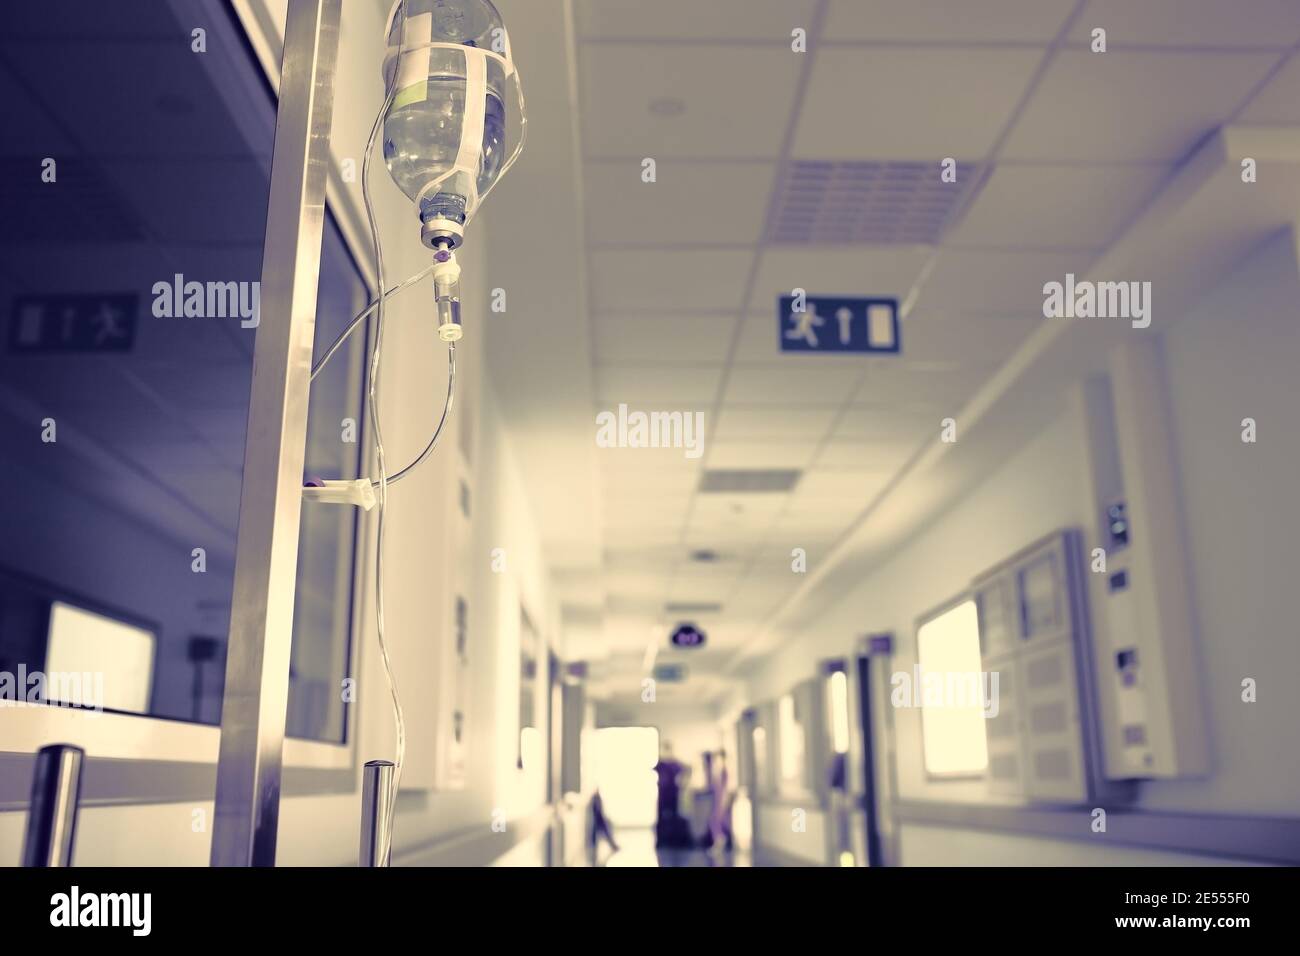 Routine life in the hospital corridor. Stock Photo